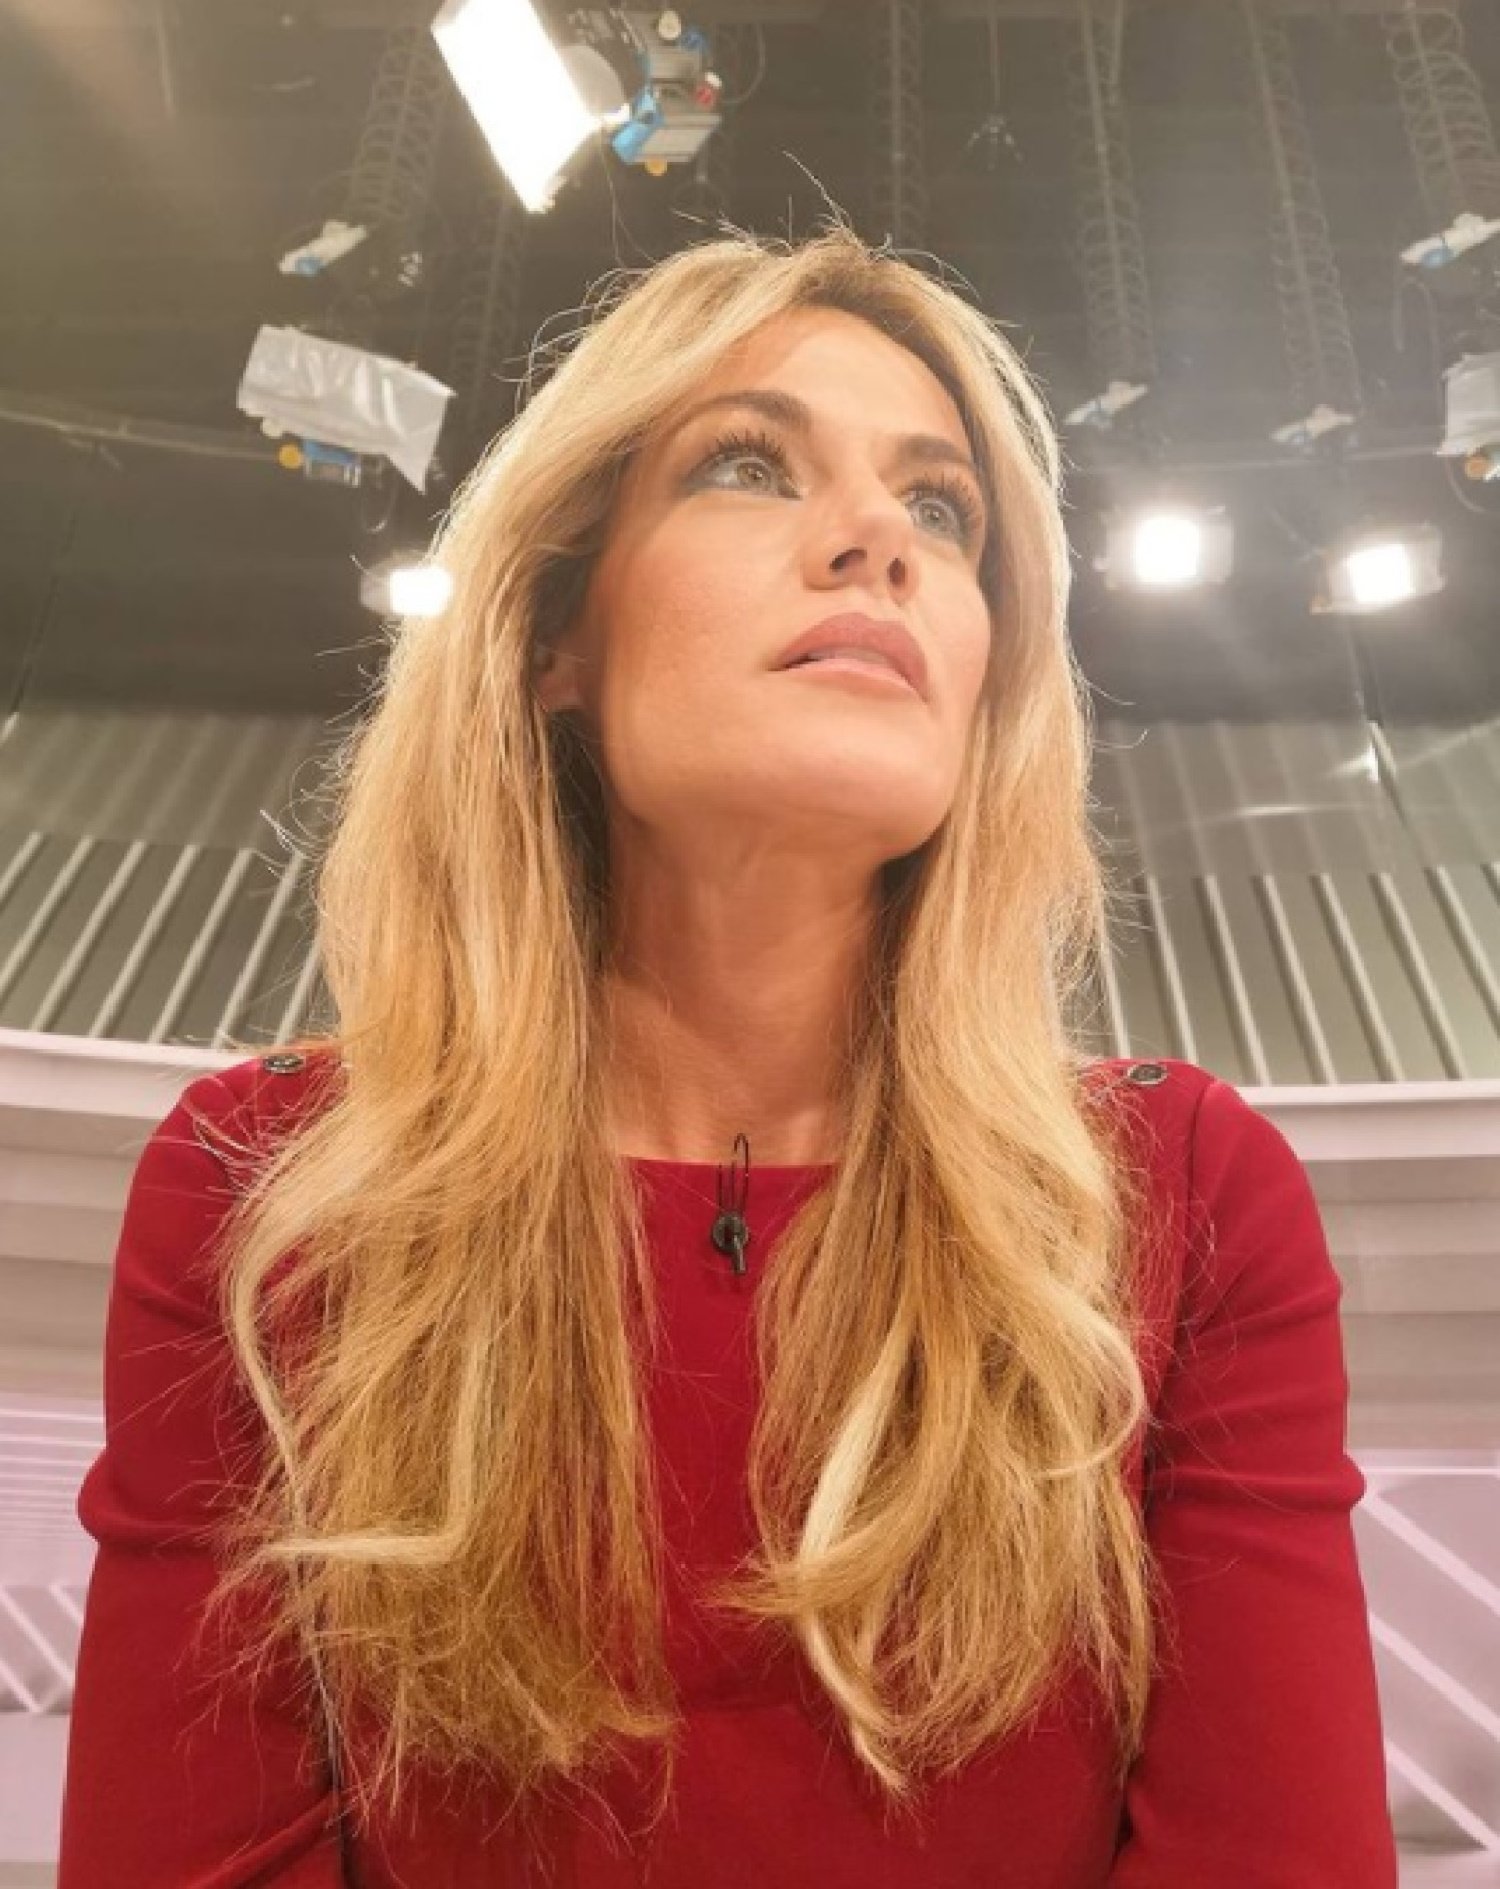 Vomitiu atac masclista a la presentadora Rocío Delgado en ple carrer: "Qué asco"